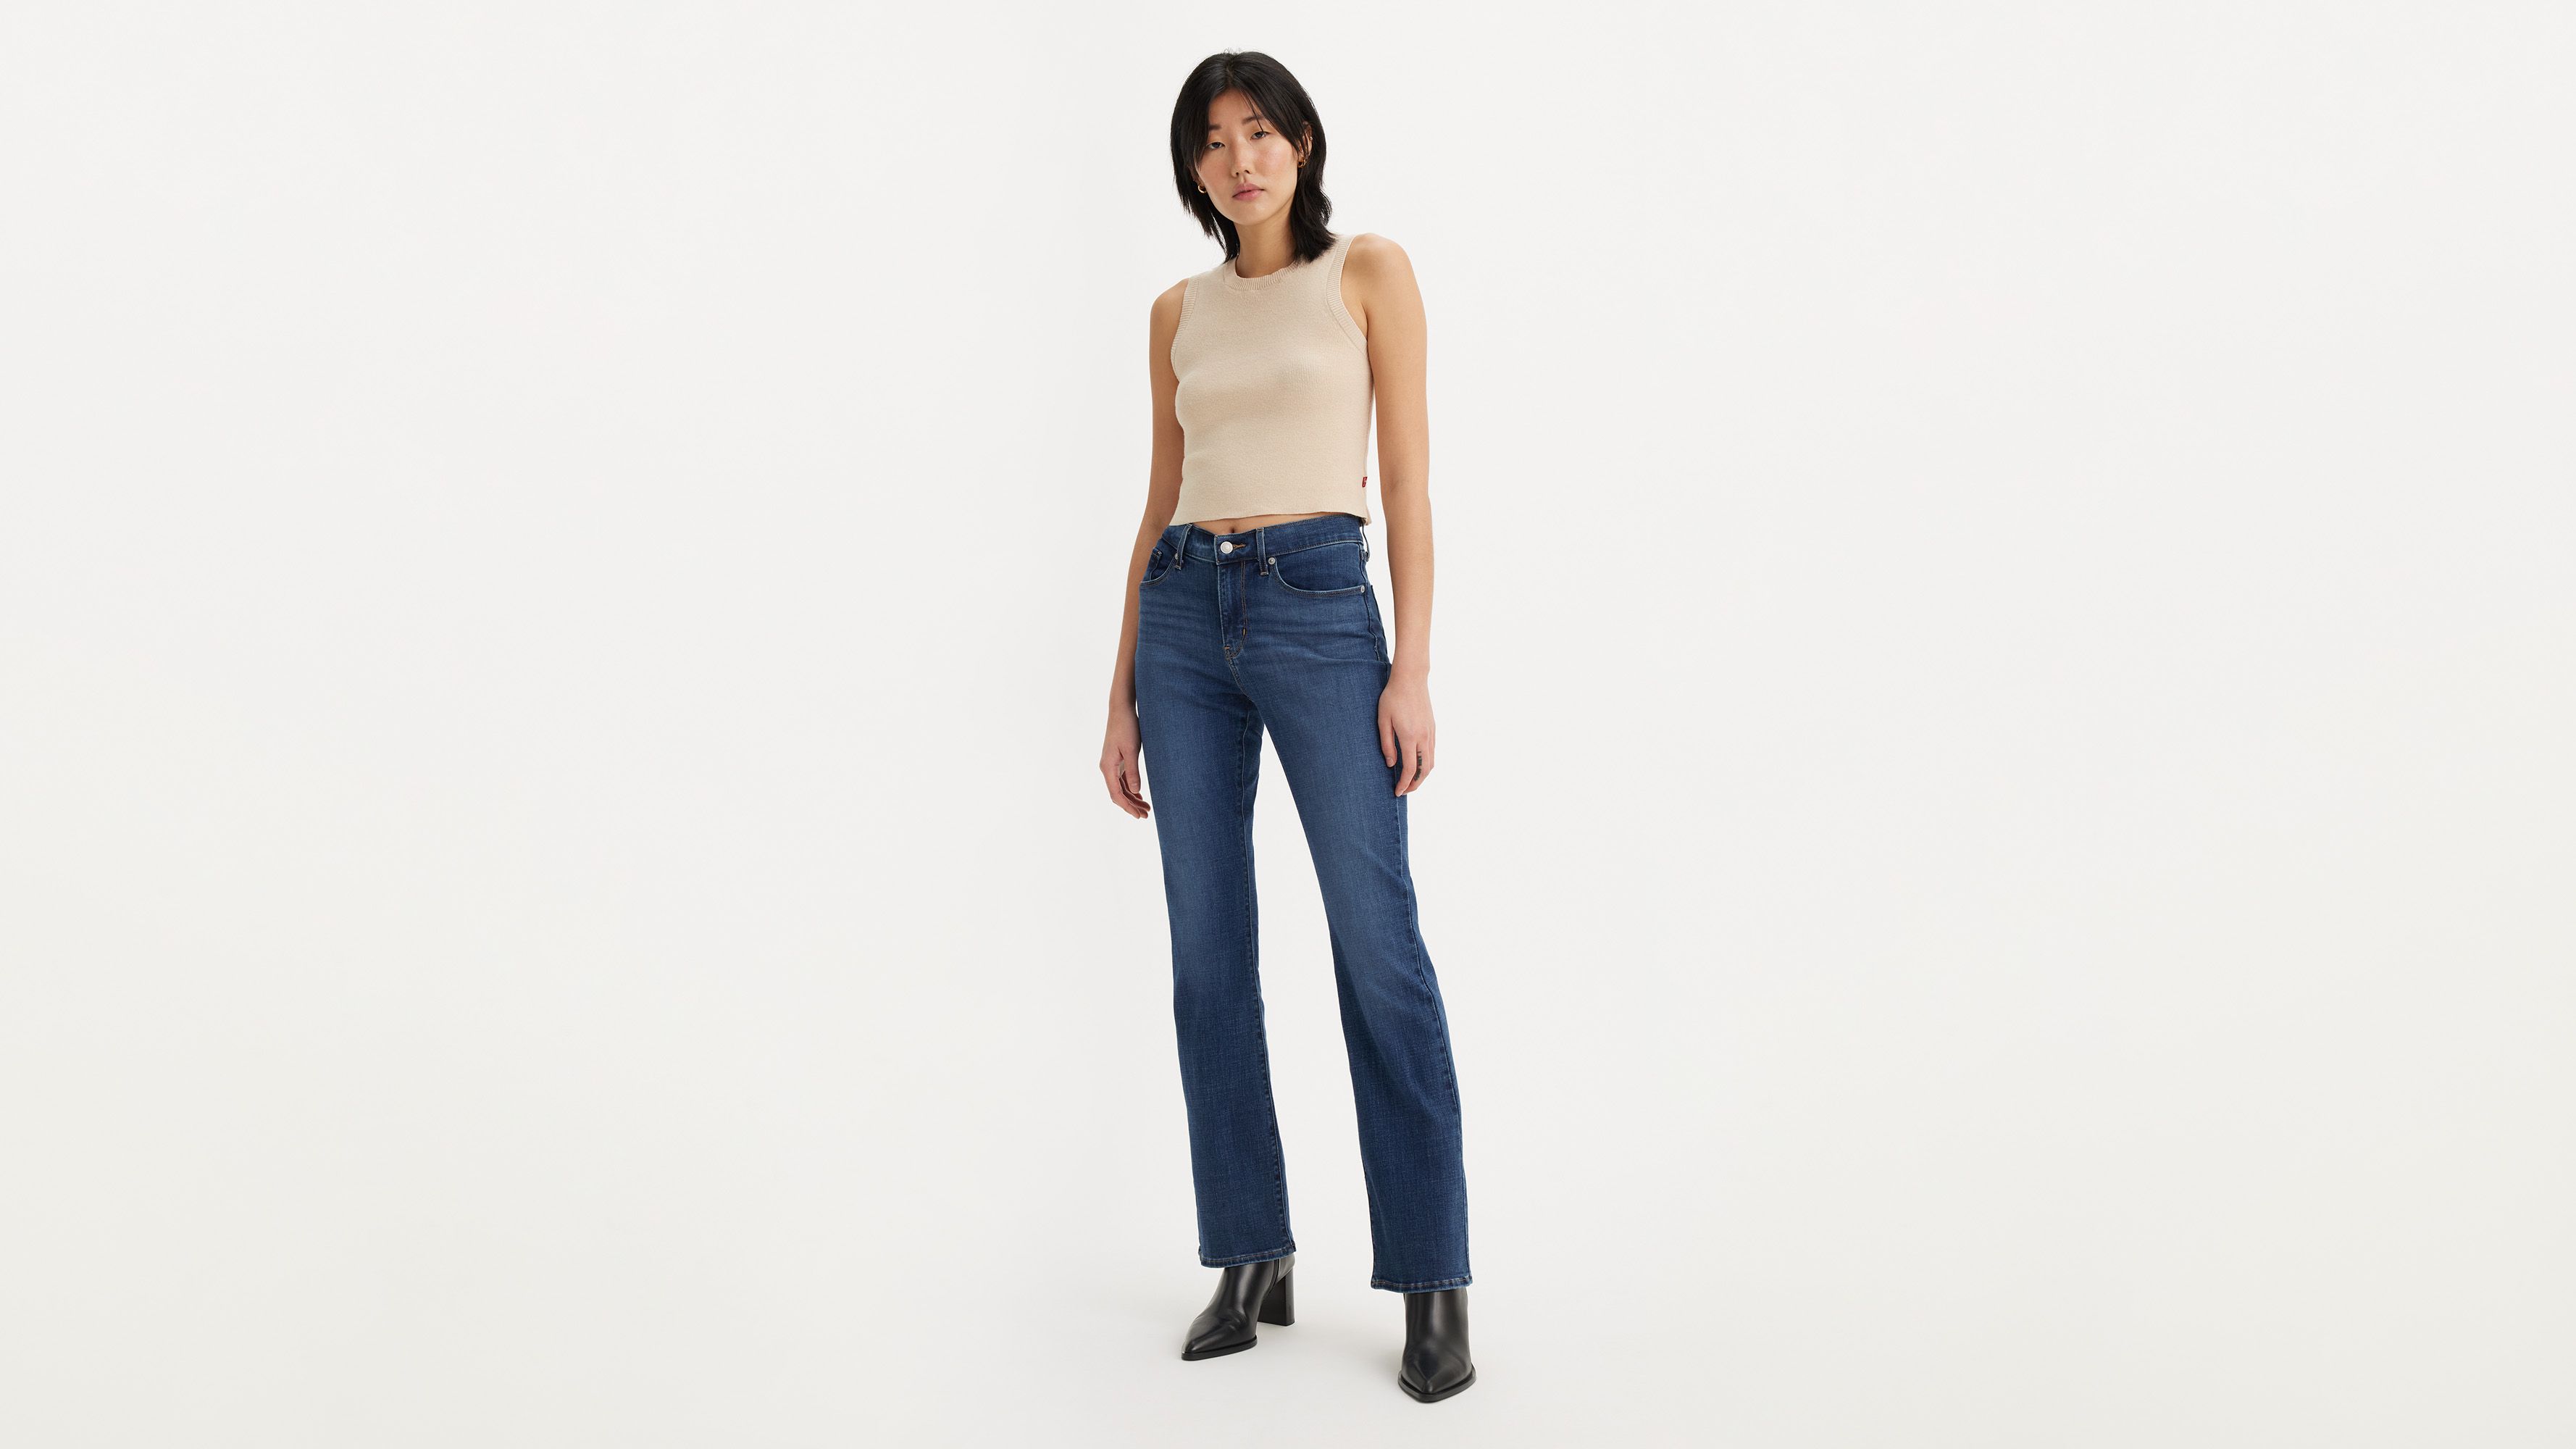 Calça Feminina Levi´s Jeans Delavê Bootcut Stellar Strech - Badana